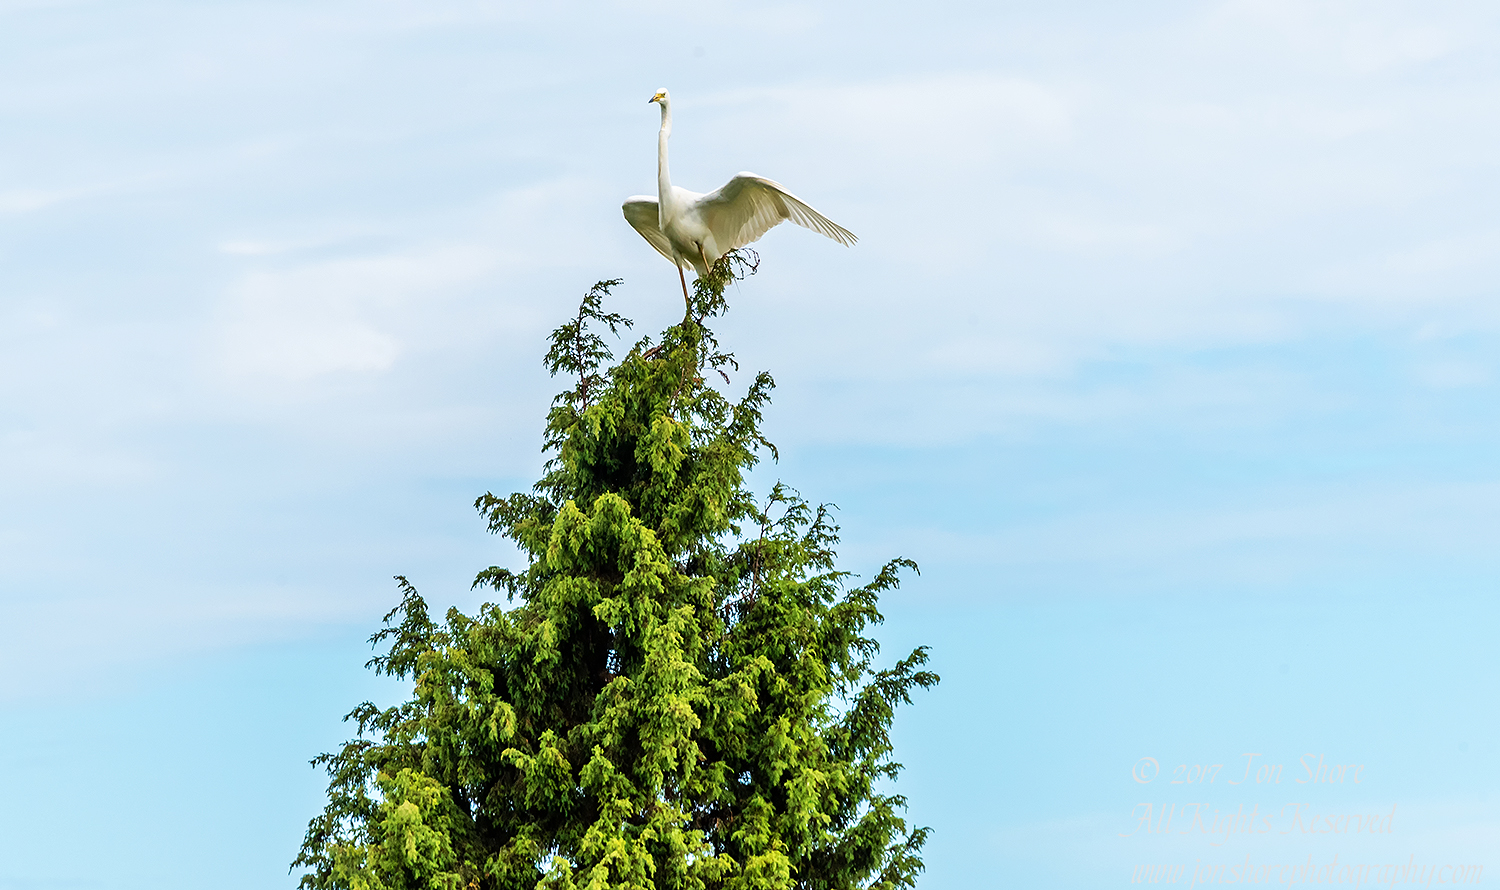 Great White Egret in a Tree, Kemeri National Park, Latvia